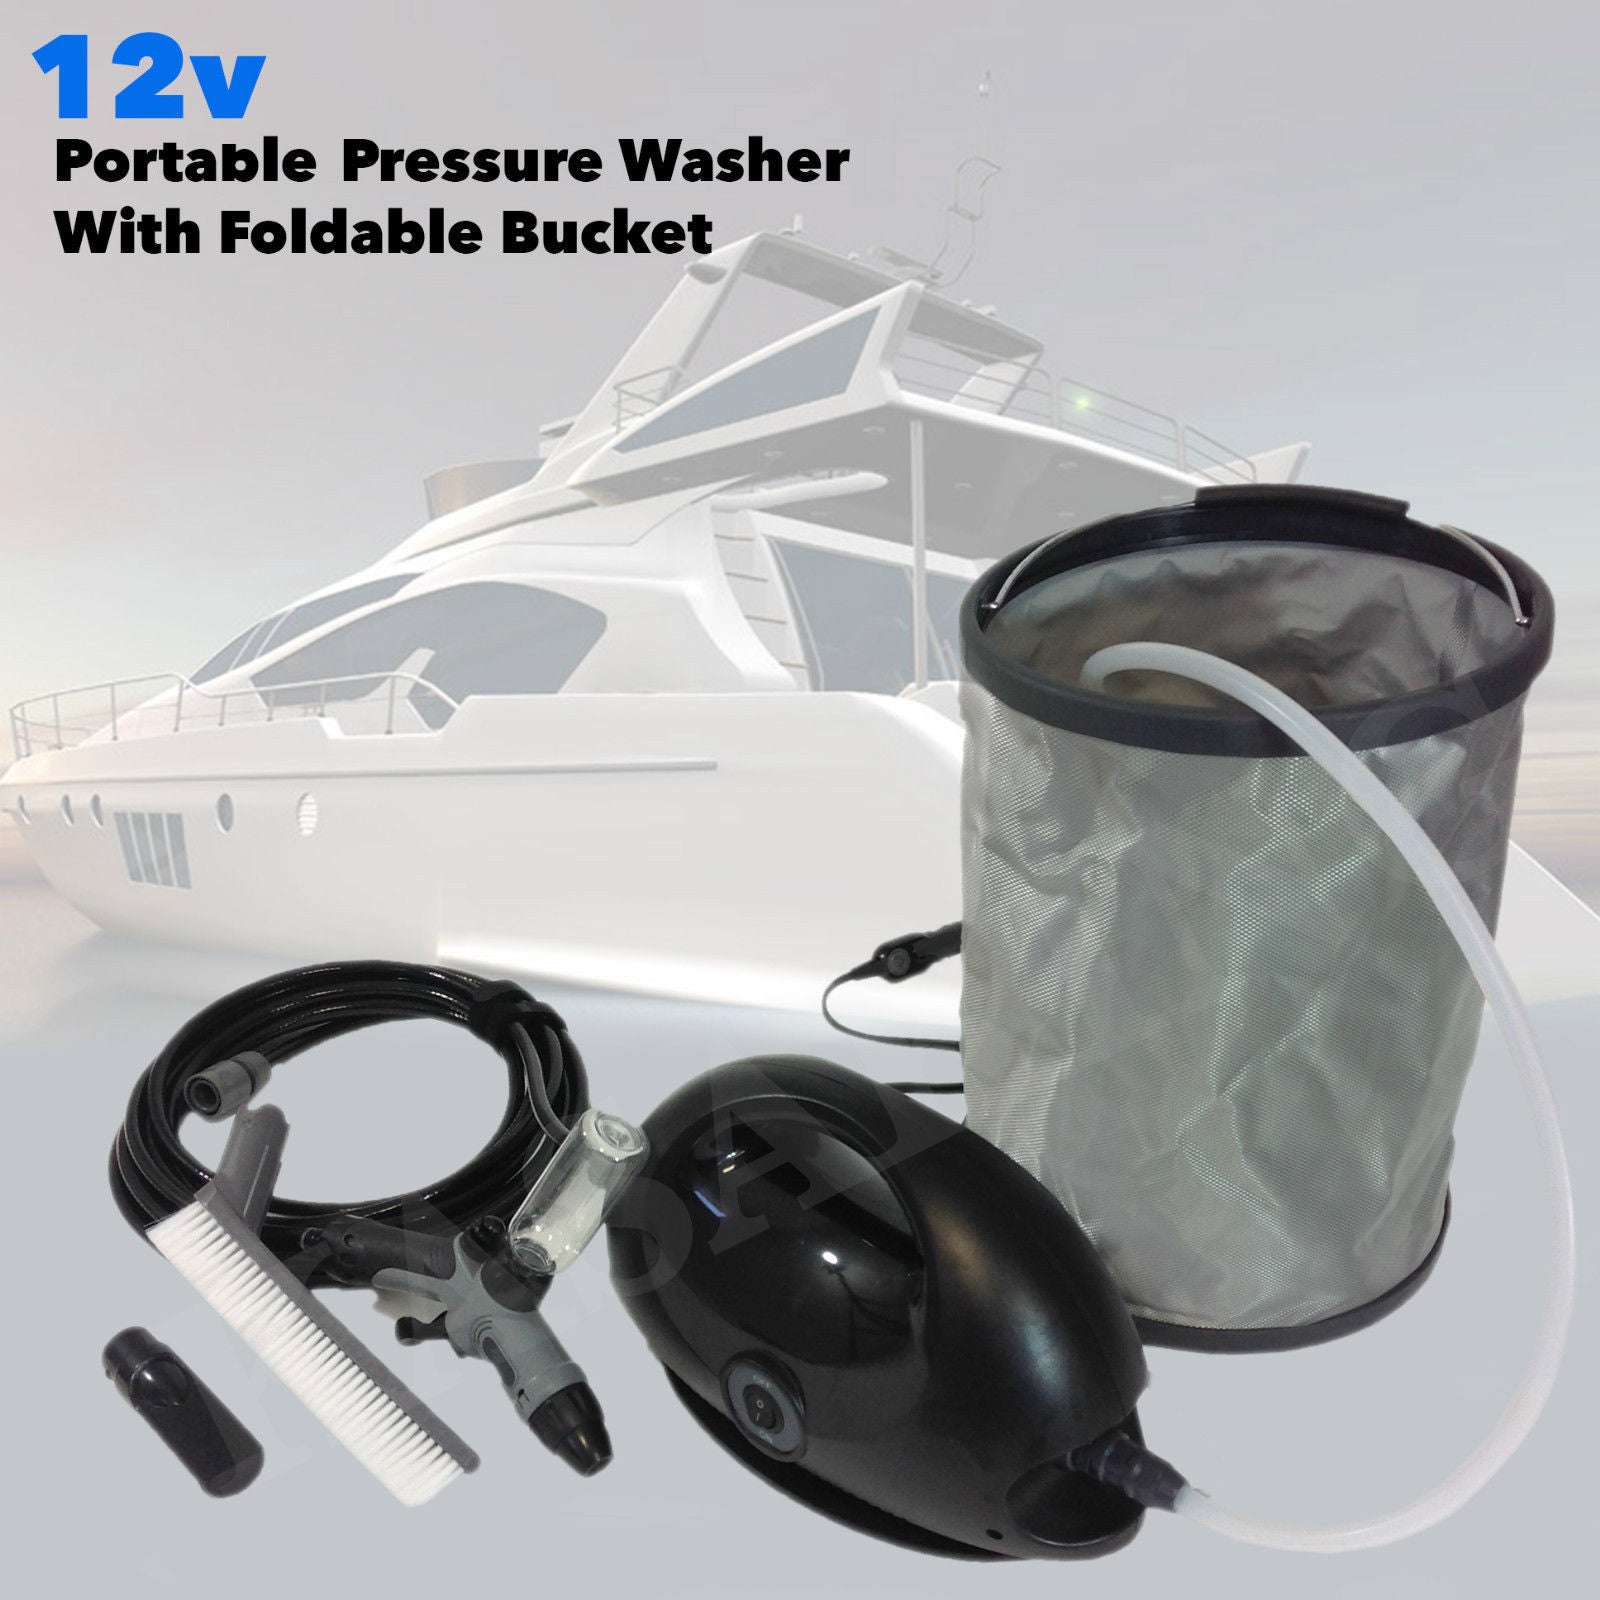 12v High Pressure Portable Washer, 60w Pump Kit Boat, Marine, Car, Caravan, Pump